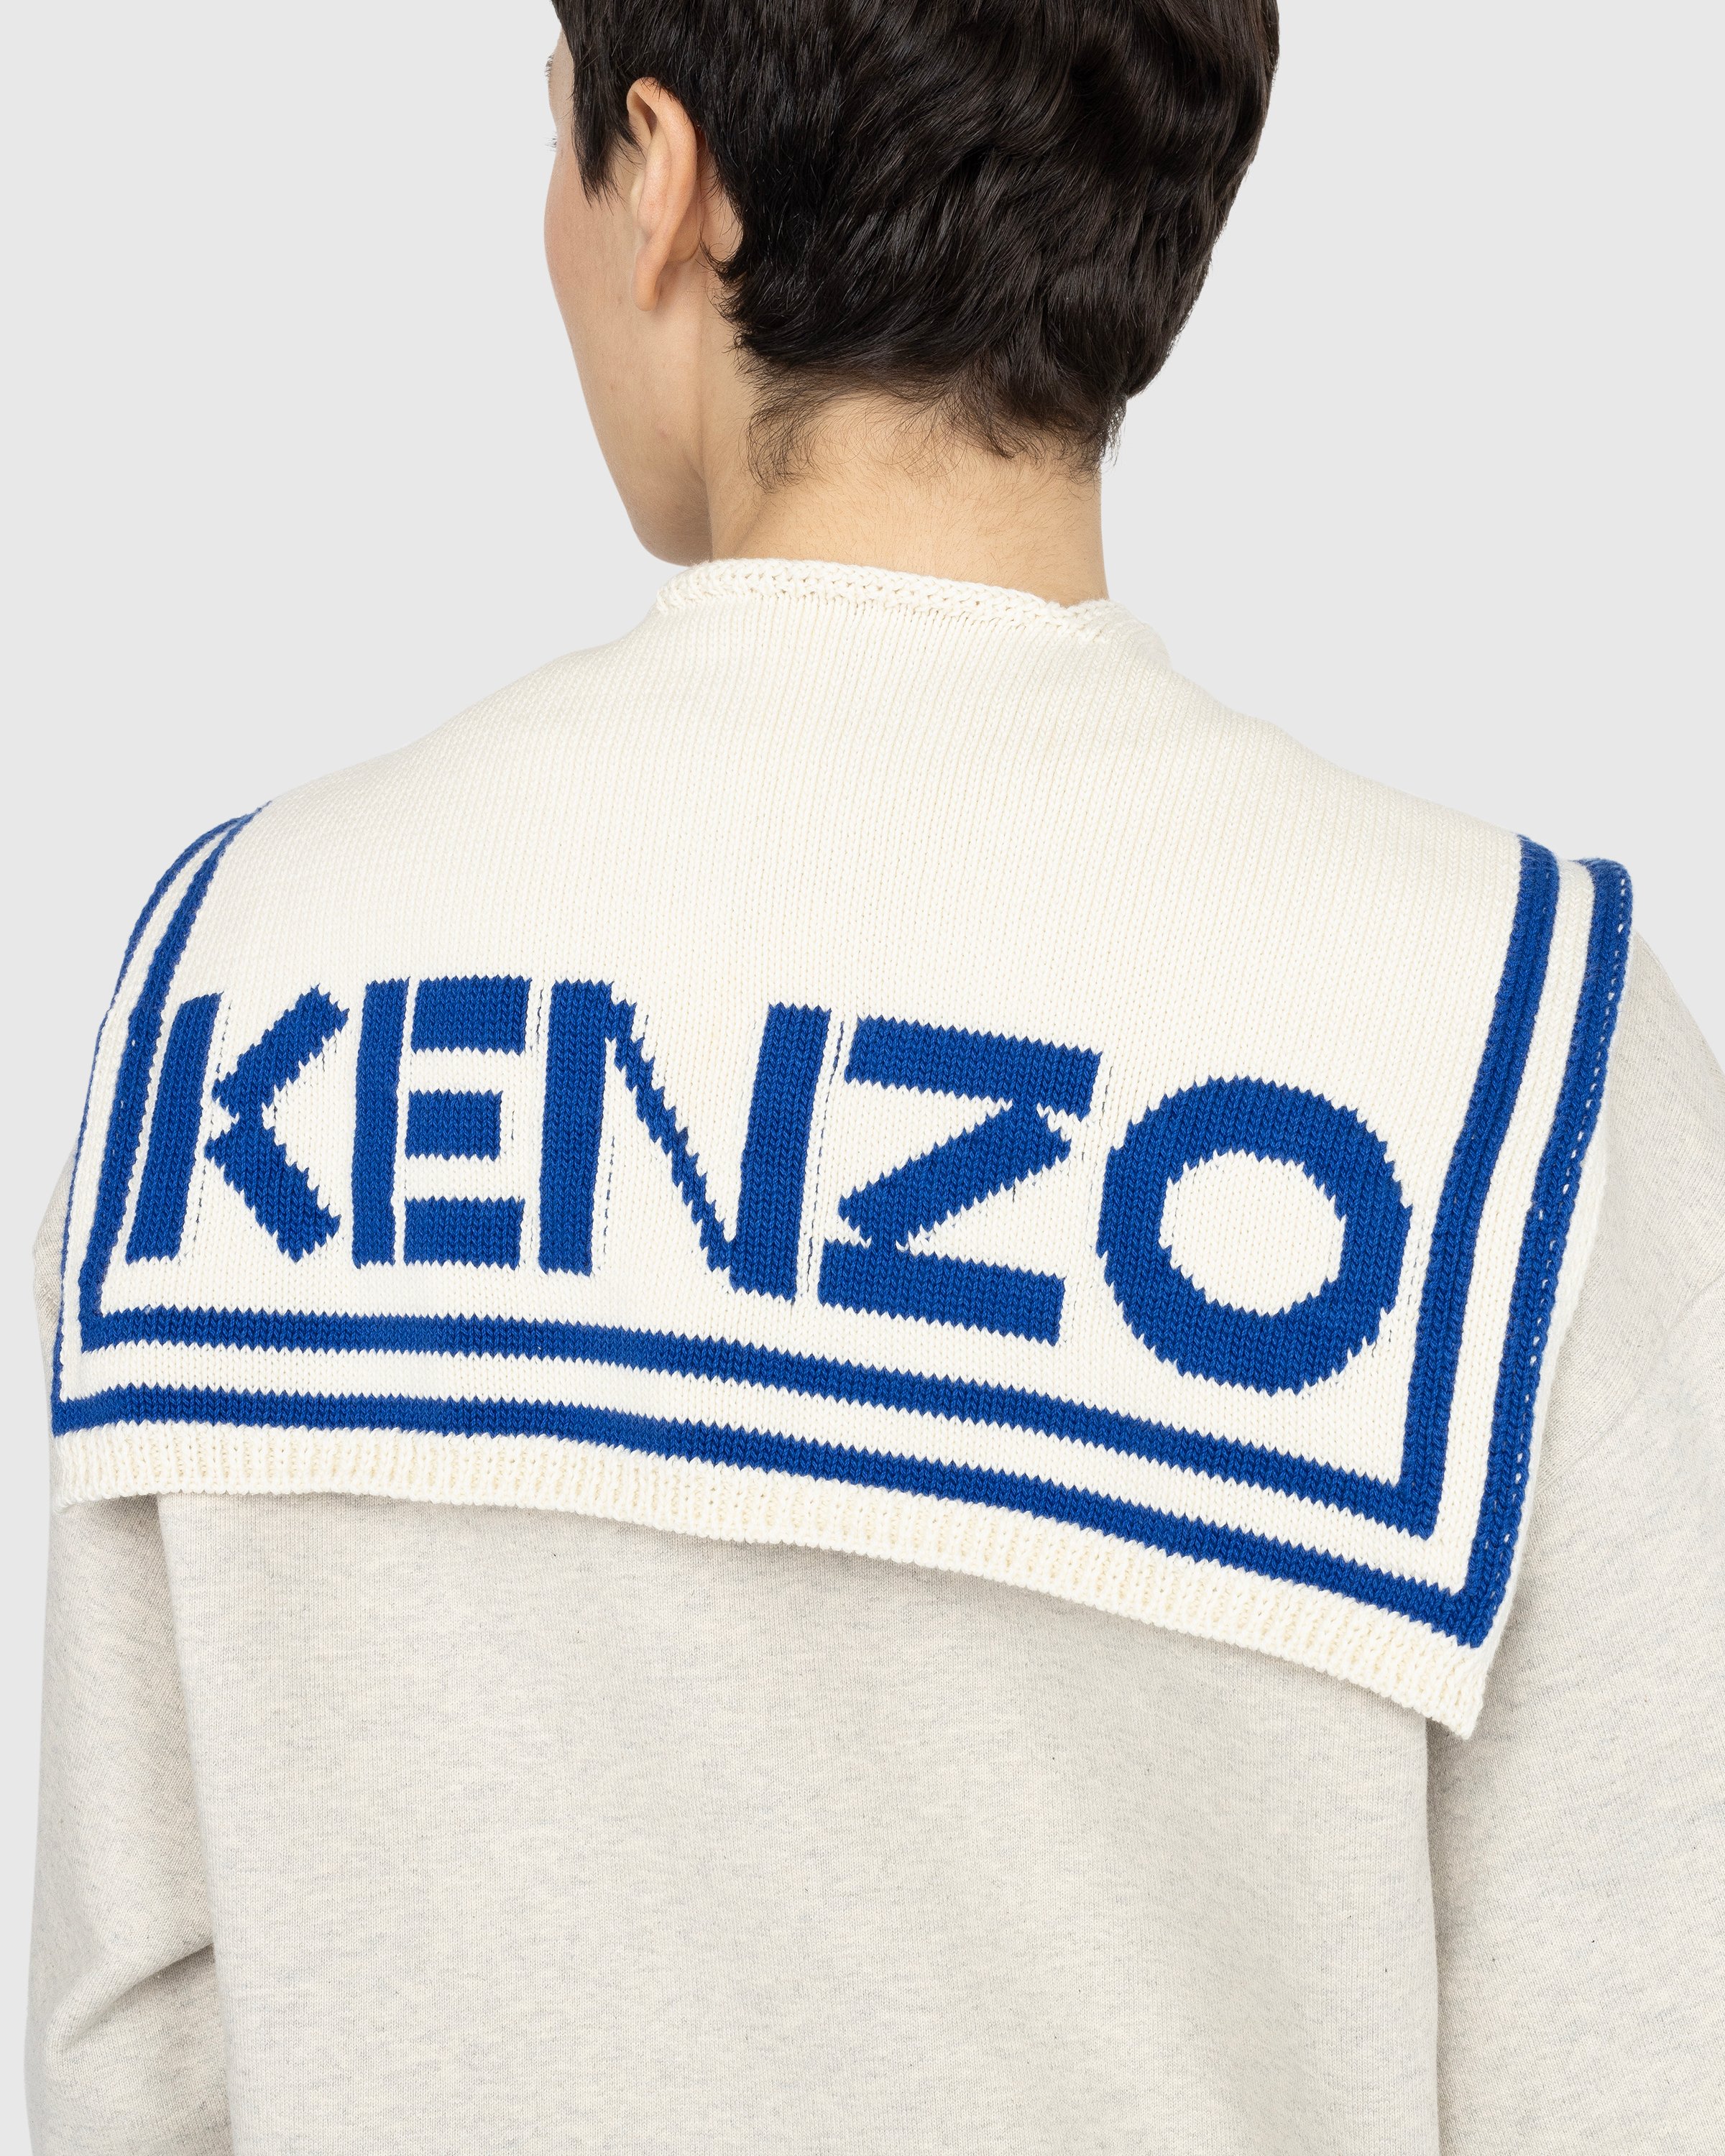 Kenzo - Sailor Bib - Accessories - Beige - Image 5